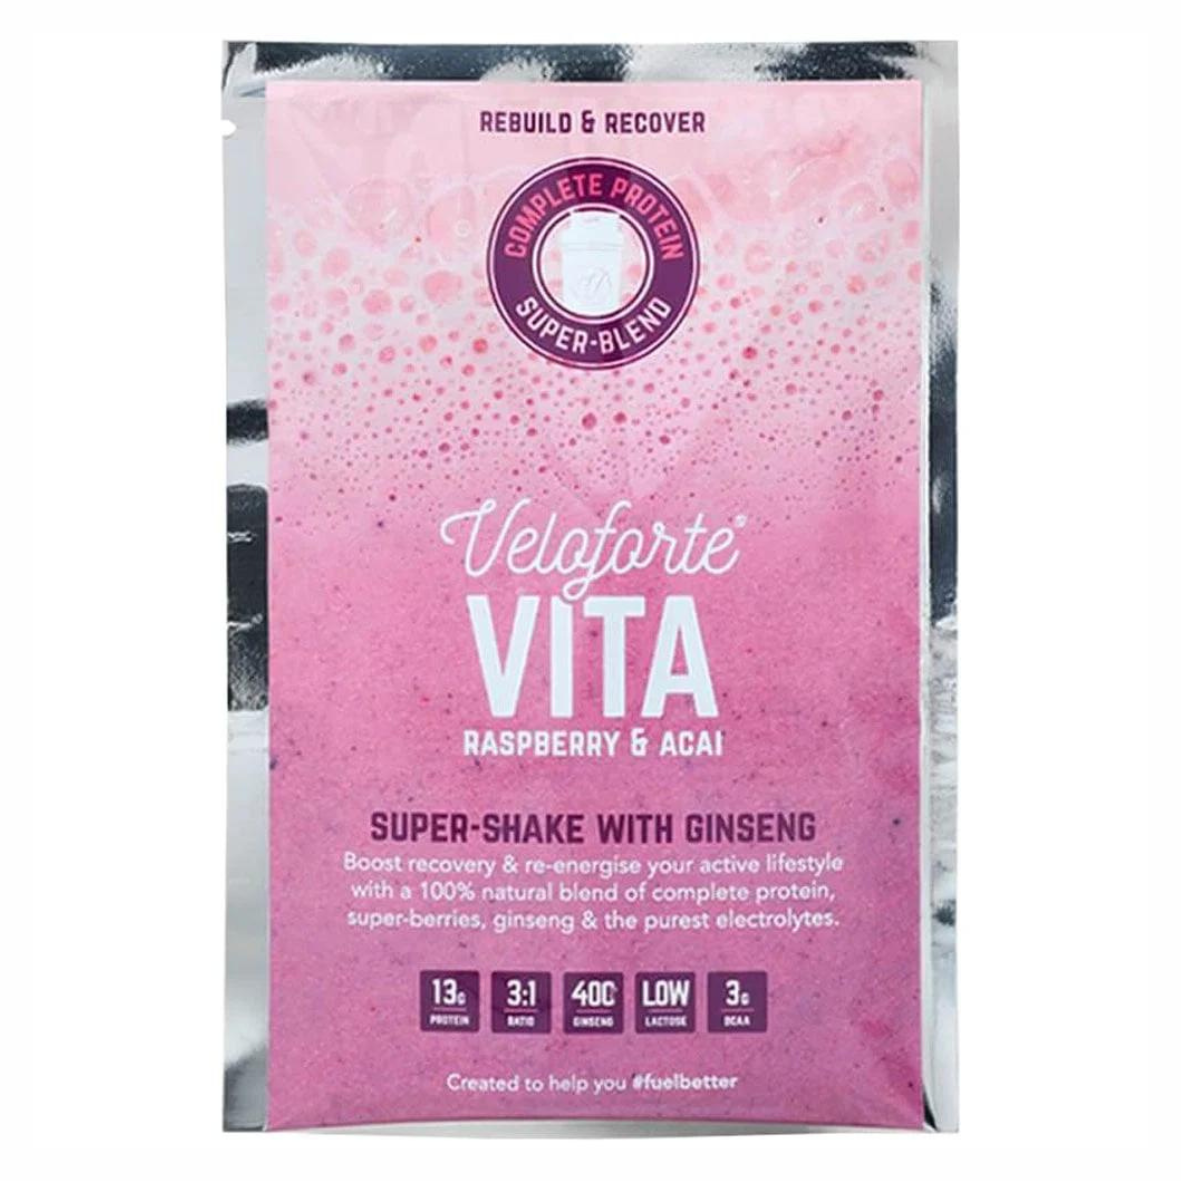 Veloforte - Vita (Raspberry & Acai) Protein Shake (62.5g)